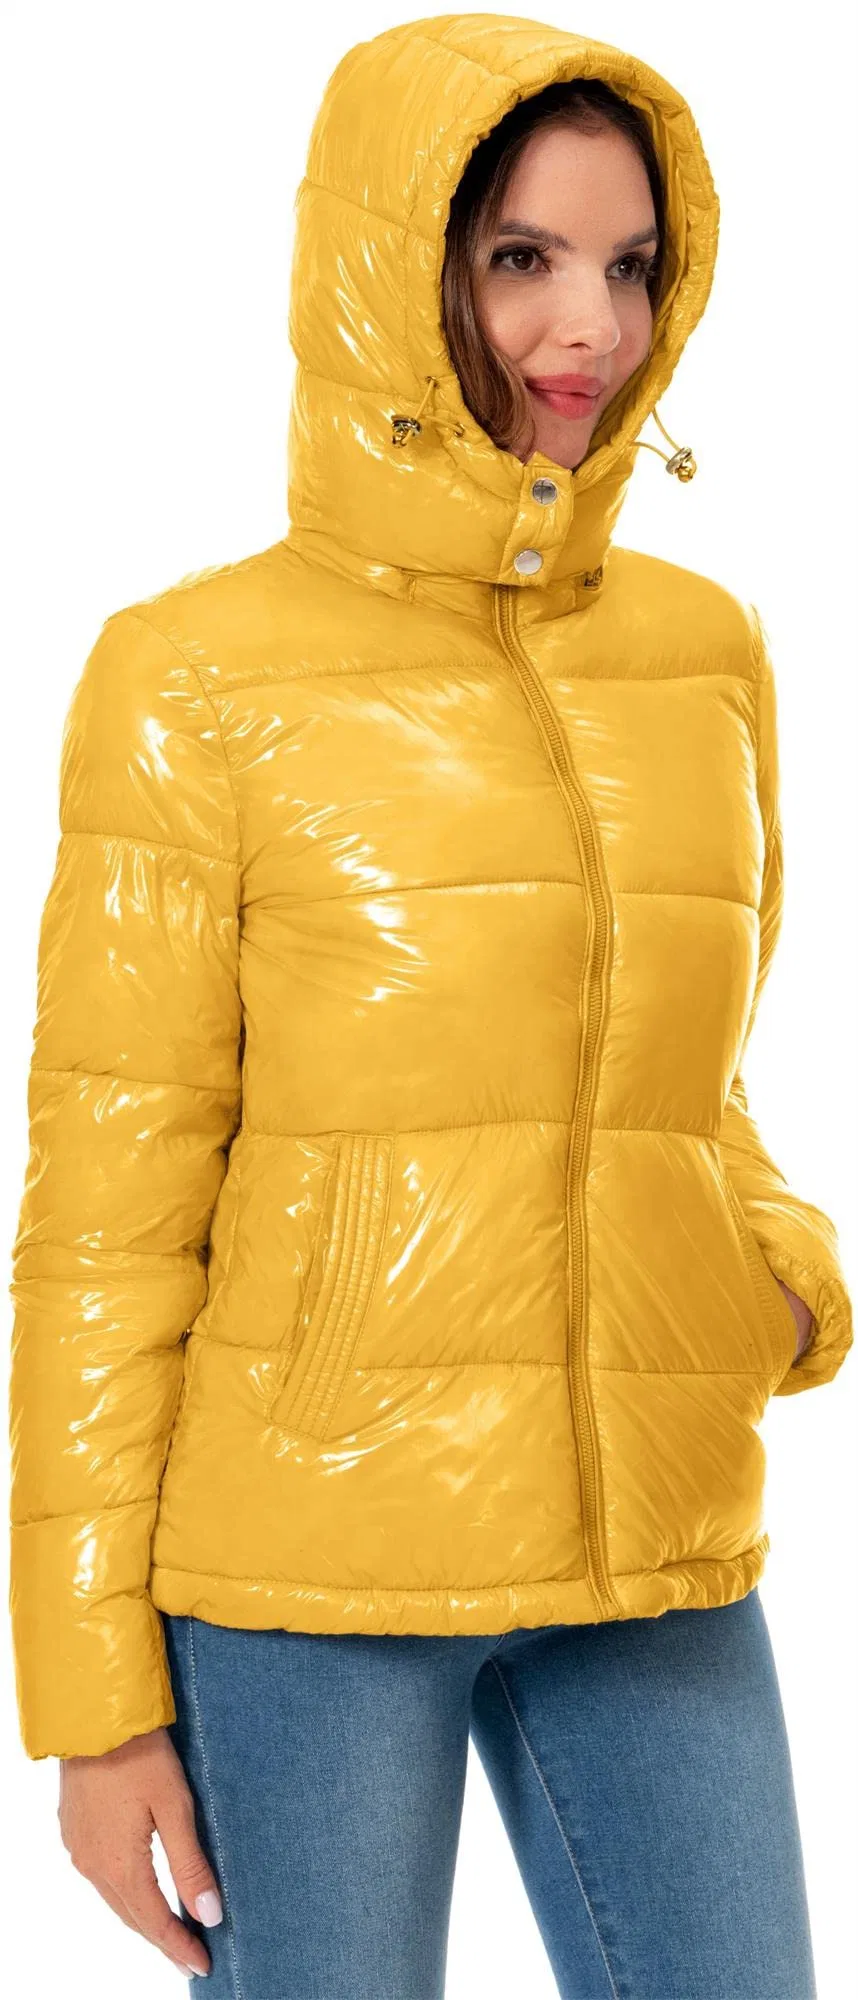 Asiapo China Factory Women's Winter Ultralight Weight Outer Wear Shiny Puffer Jacket